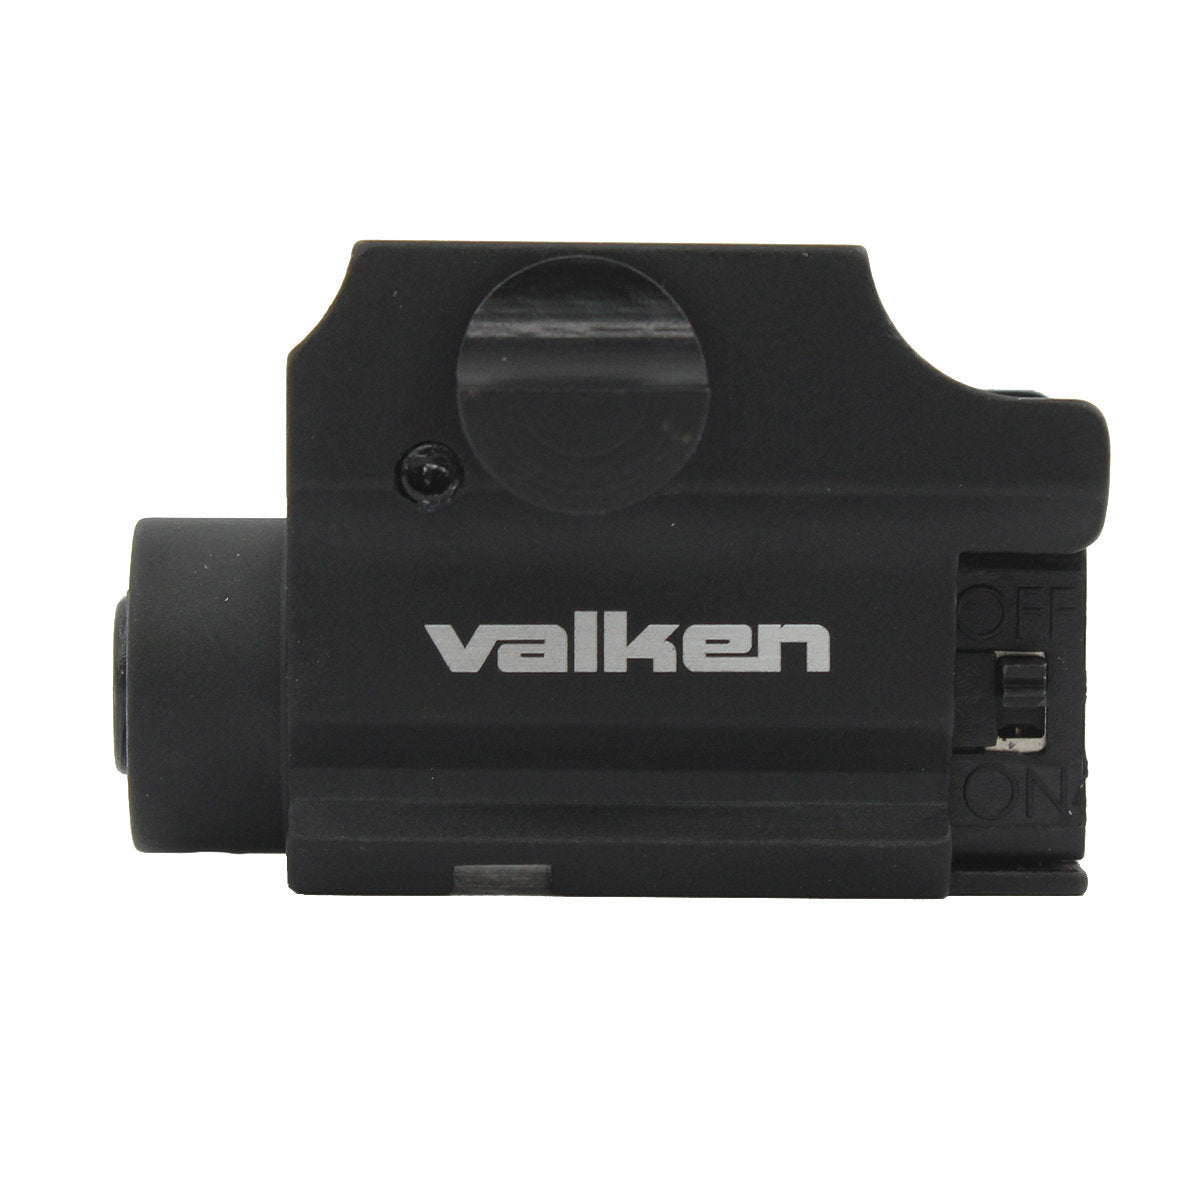 Valken Red Compact Hd Laser W/Remote Switch